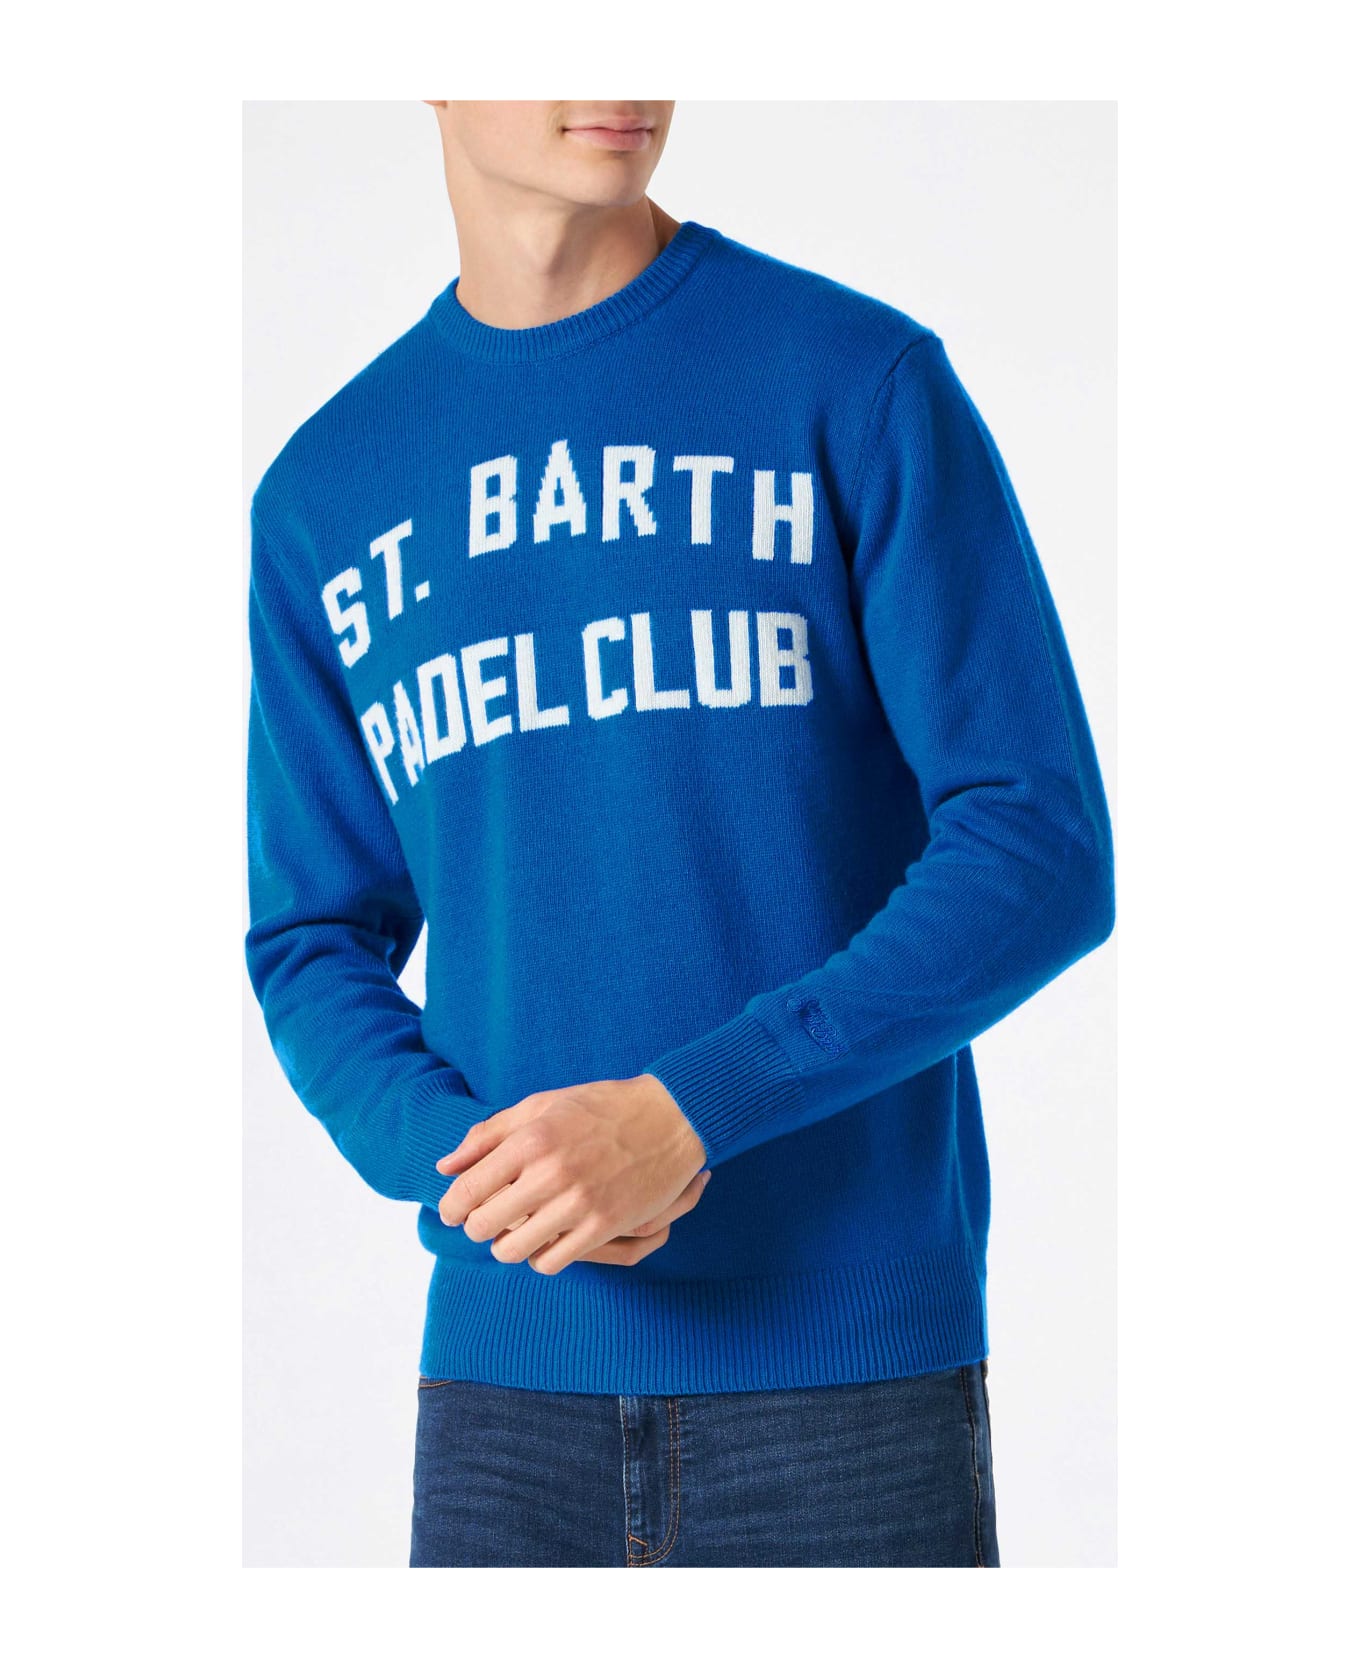 MC2 Saint Barth Man Sweater With St. Barth Padel Club Lettering ニットウェア